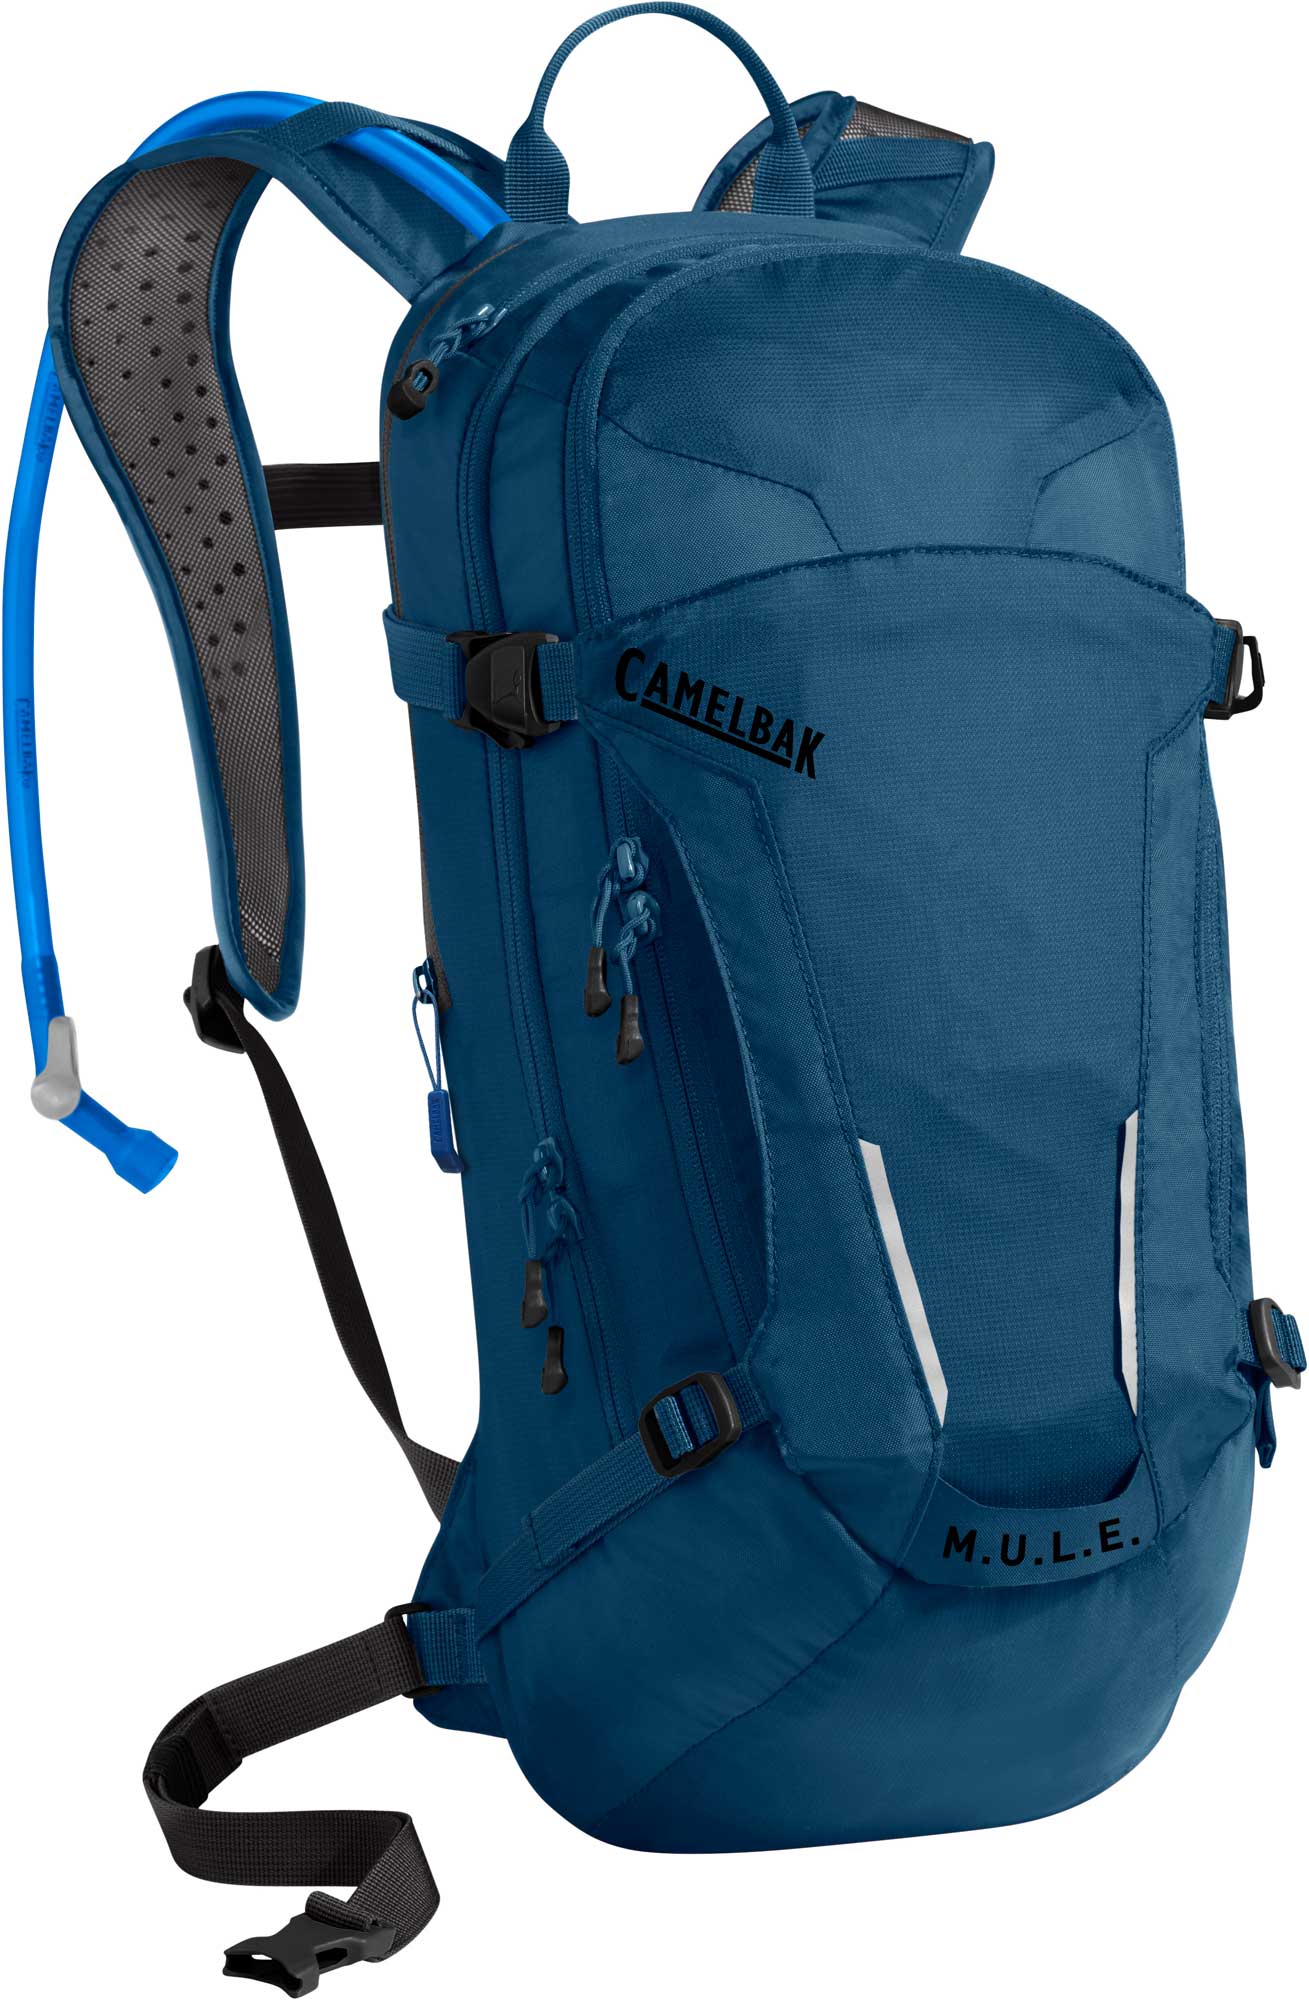 Camelbak Mule - Cycling backpack